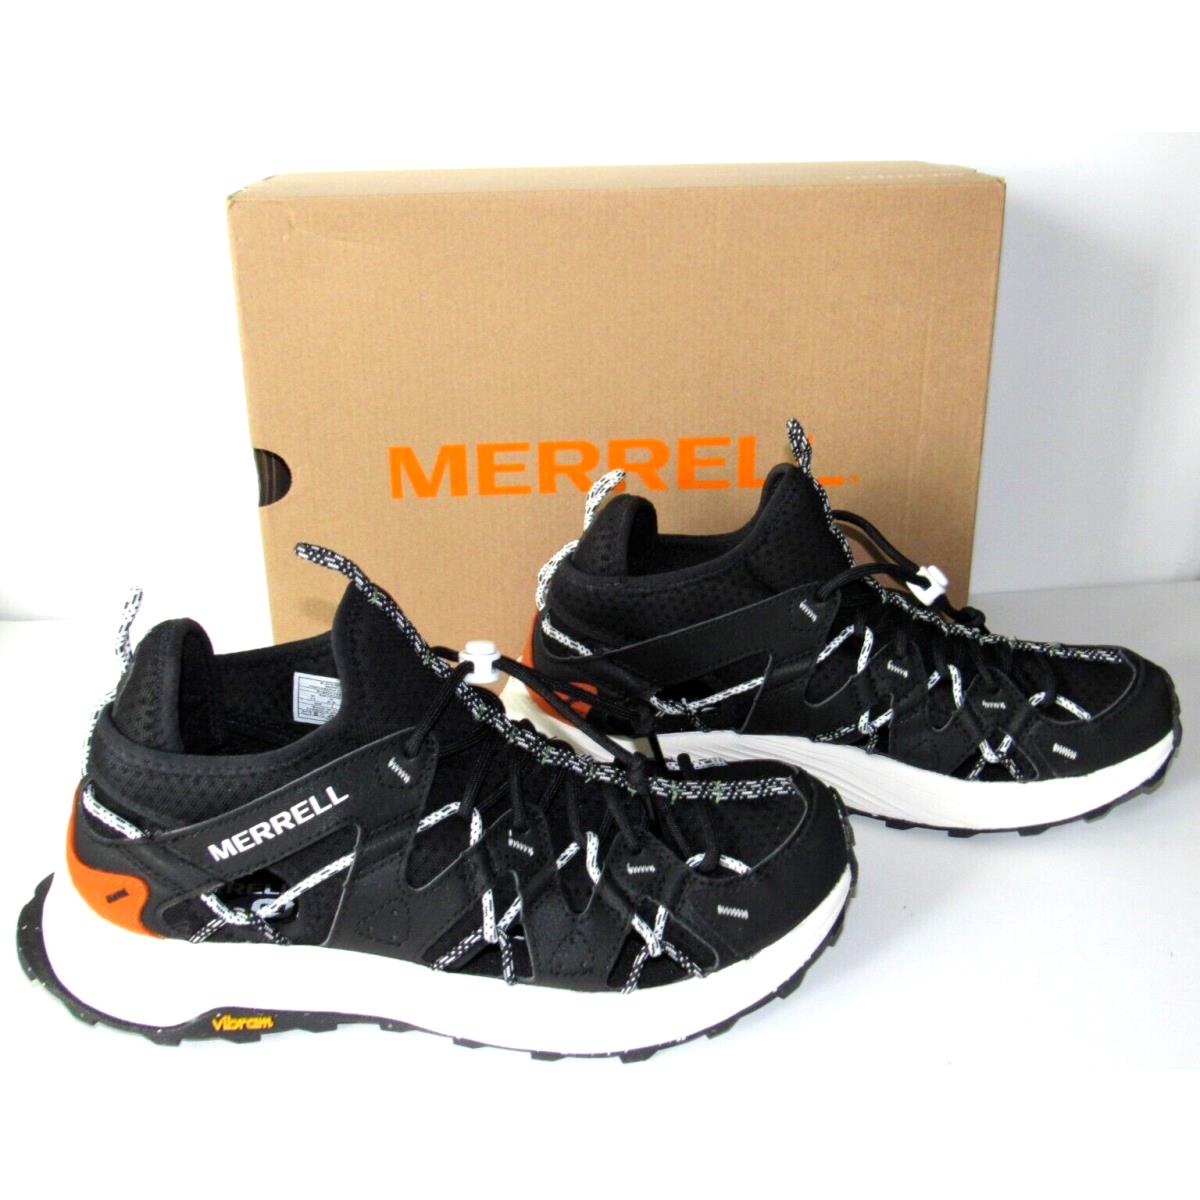 Merrell Moab Flight Sieve Black Vibram Slip-on Water Hiking Shoes Womens Size 11